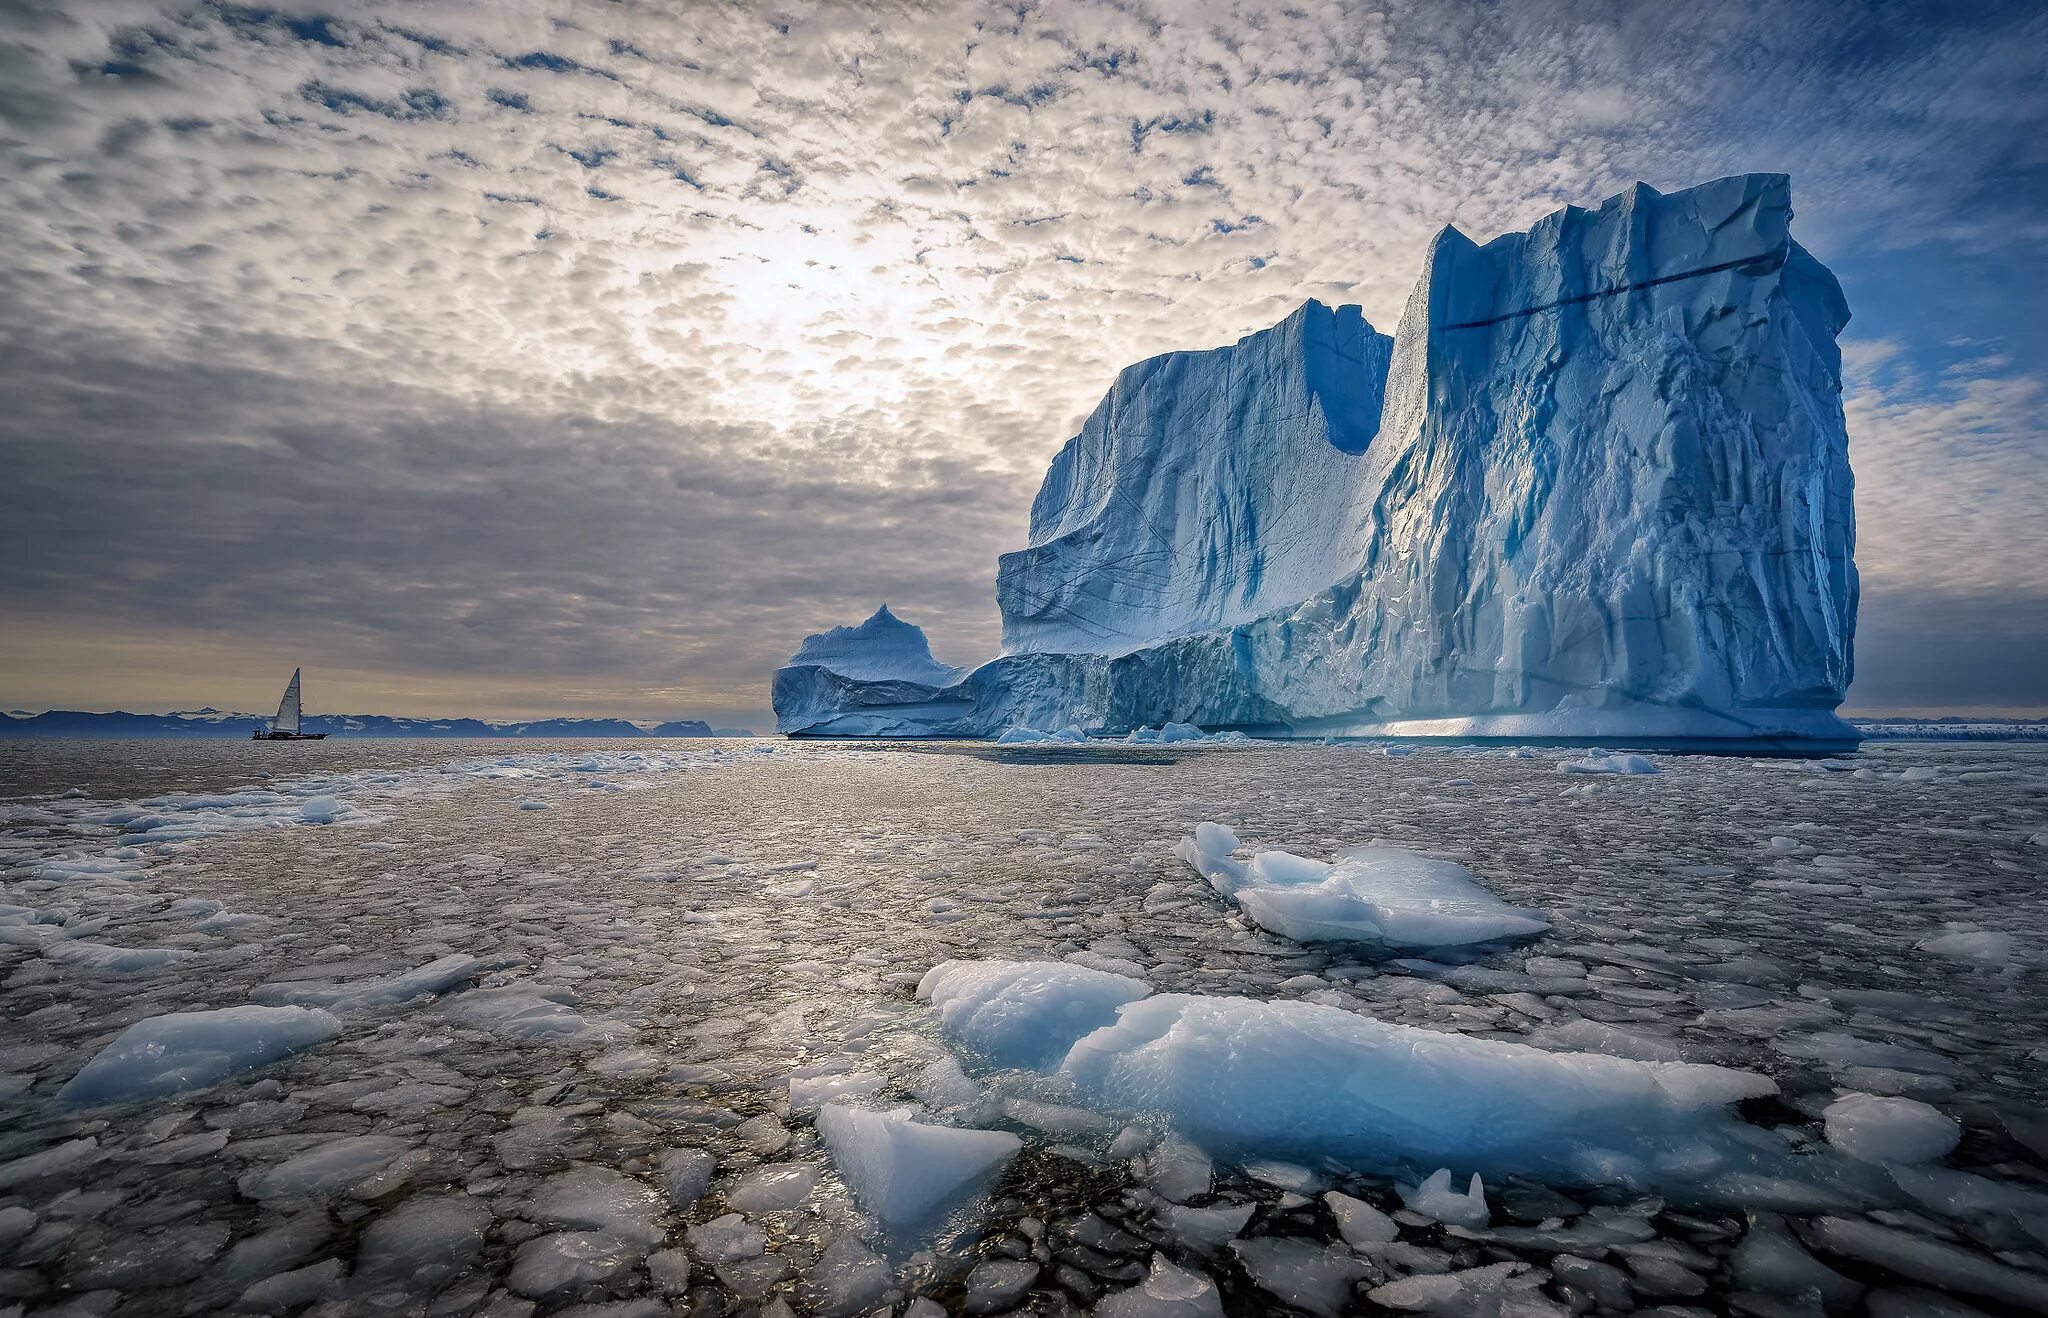 Арктика Северный Ледовитый океан. Антарктида Гренландия Арктика Северный Ледовитый океан. Гренландия Северный Ледовитый океан. Ледовитый океан Айсберг. Как меняется природа арктических морей